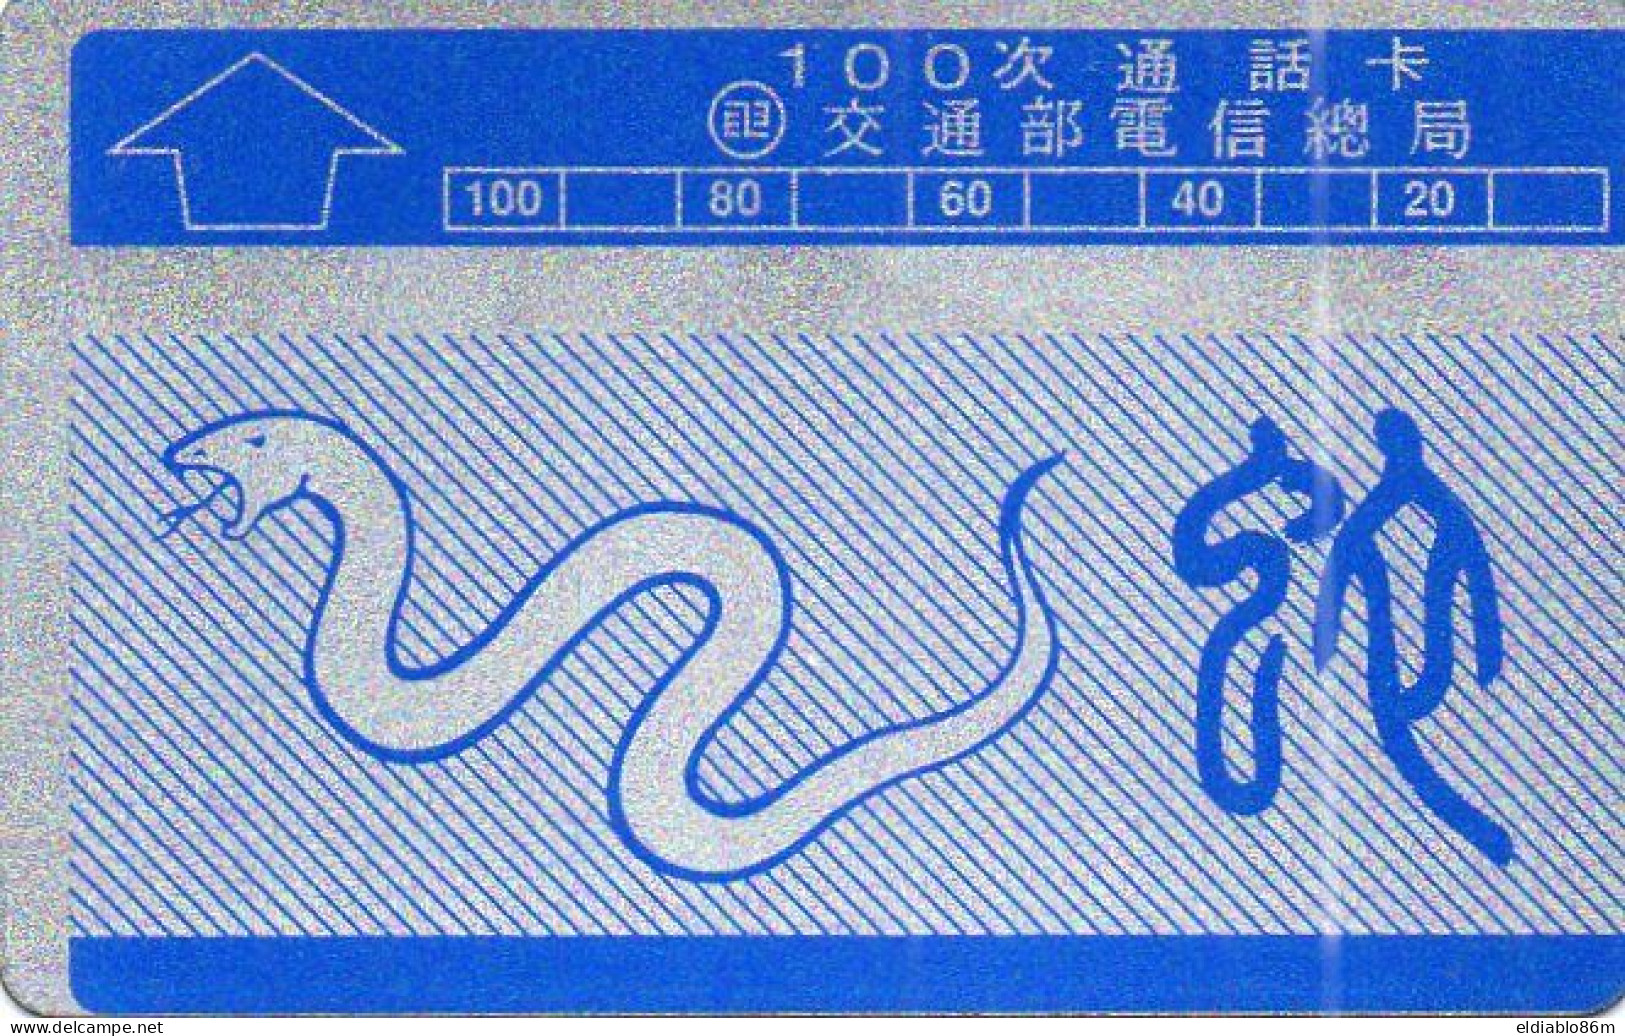 TAIWAN - L&G - BUREAU - N0013 - ZODIAC SNAKE - DUMMY CARD - SHIFT PRINTED - NO CN - Taiwan (Formose)